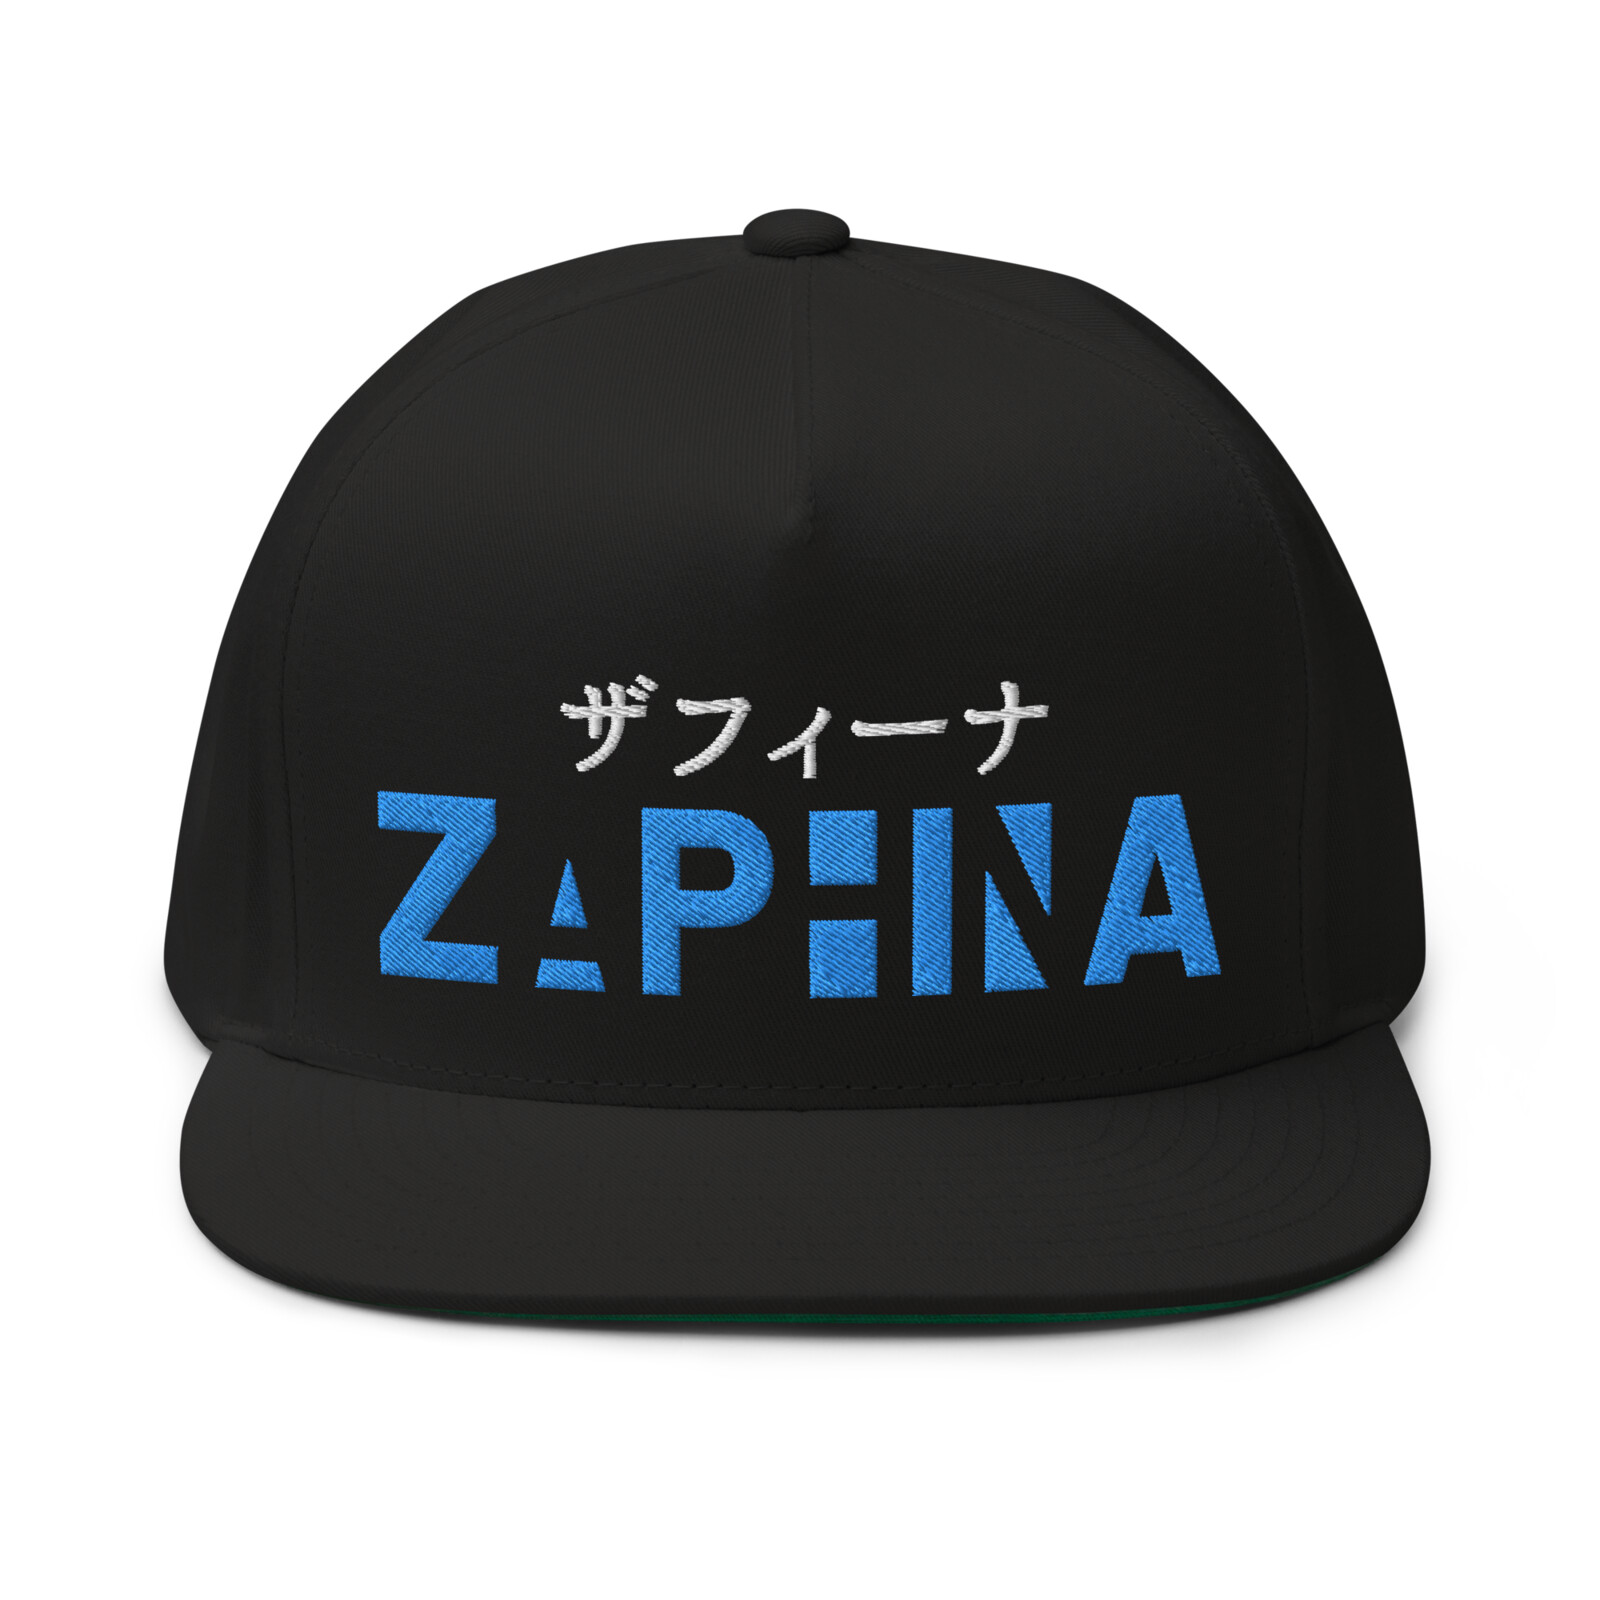 Zaphina Merchandise